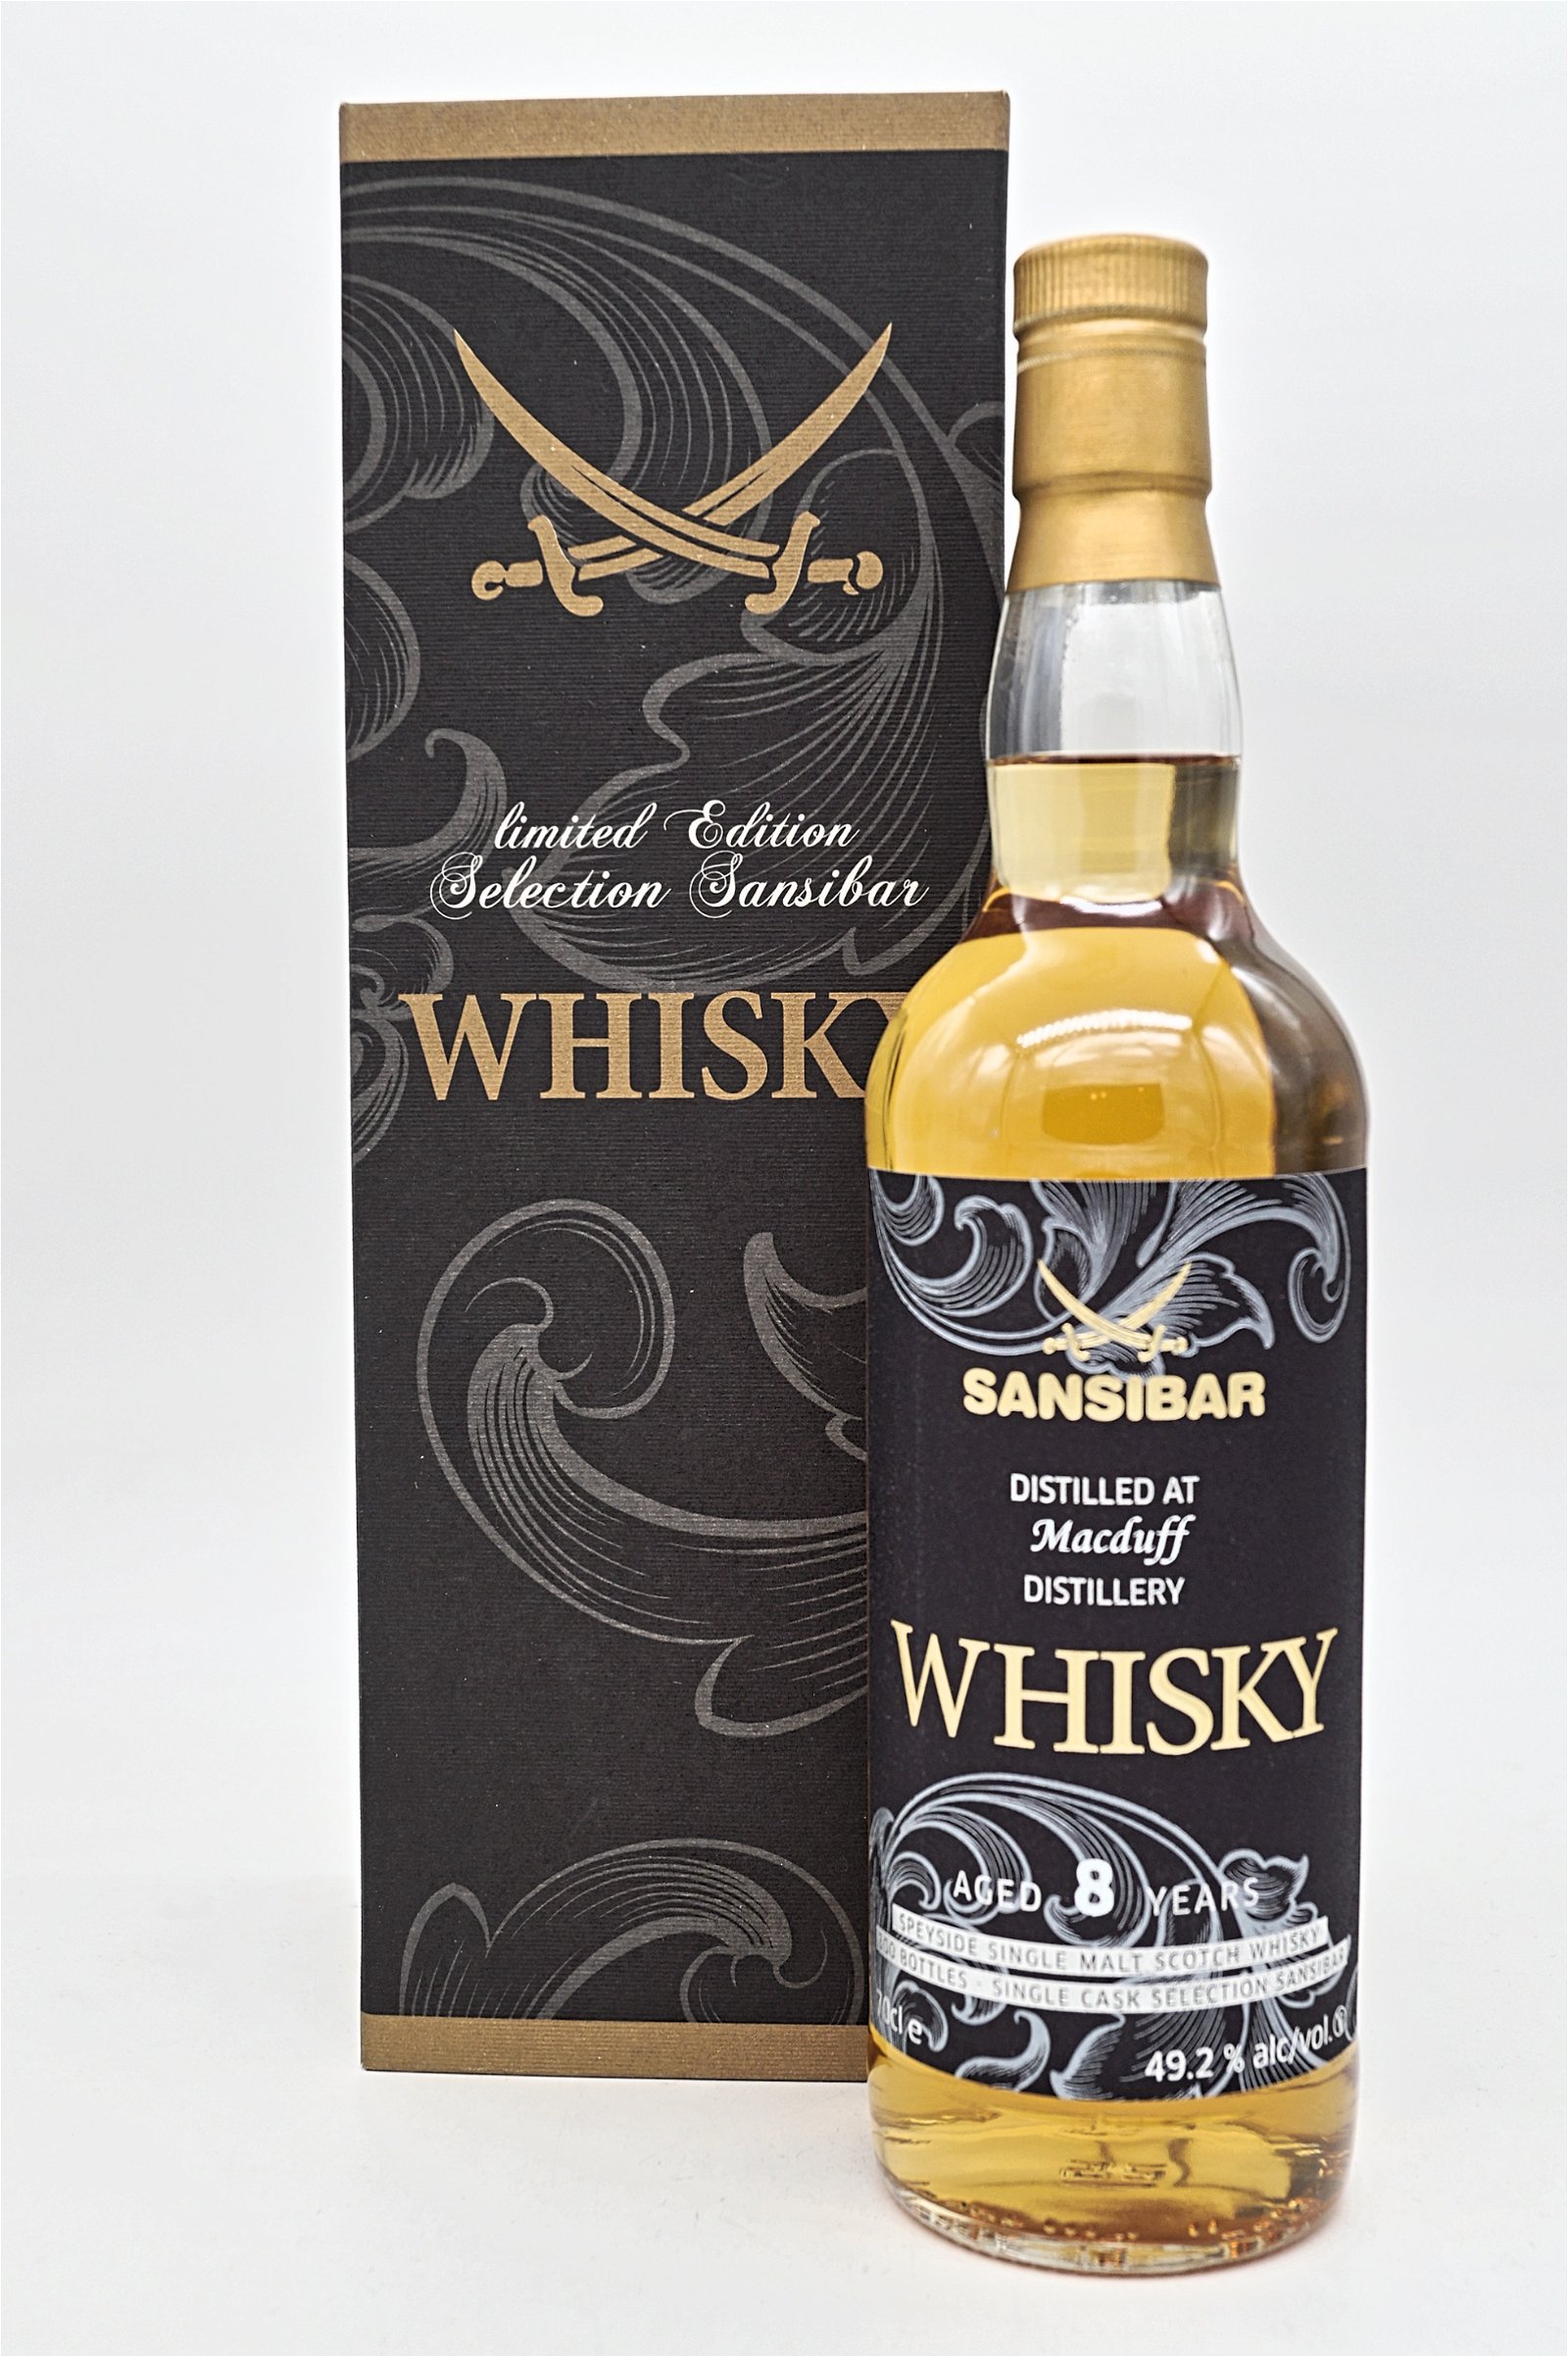 Sansibar Whisky 8 Jahre Macduff Distillery 2007/2015 Limited Edition Single Cask Single Malt Scotch Whisky